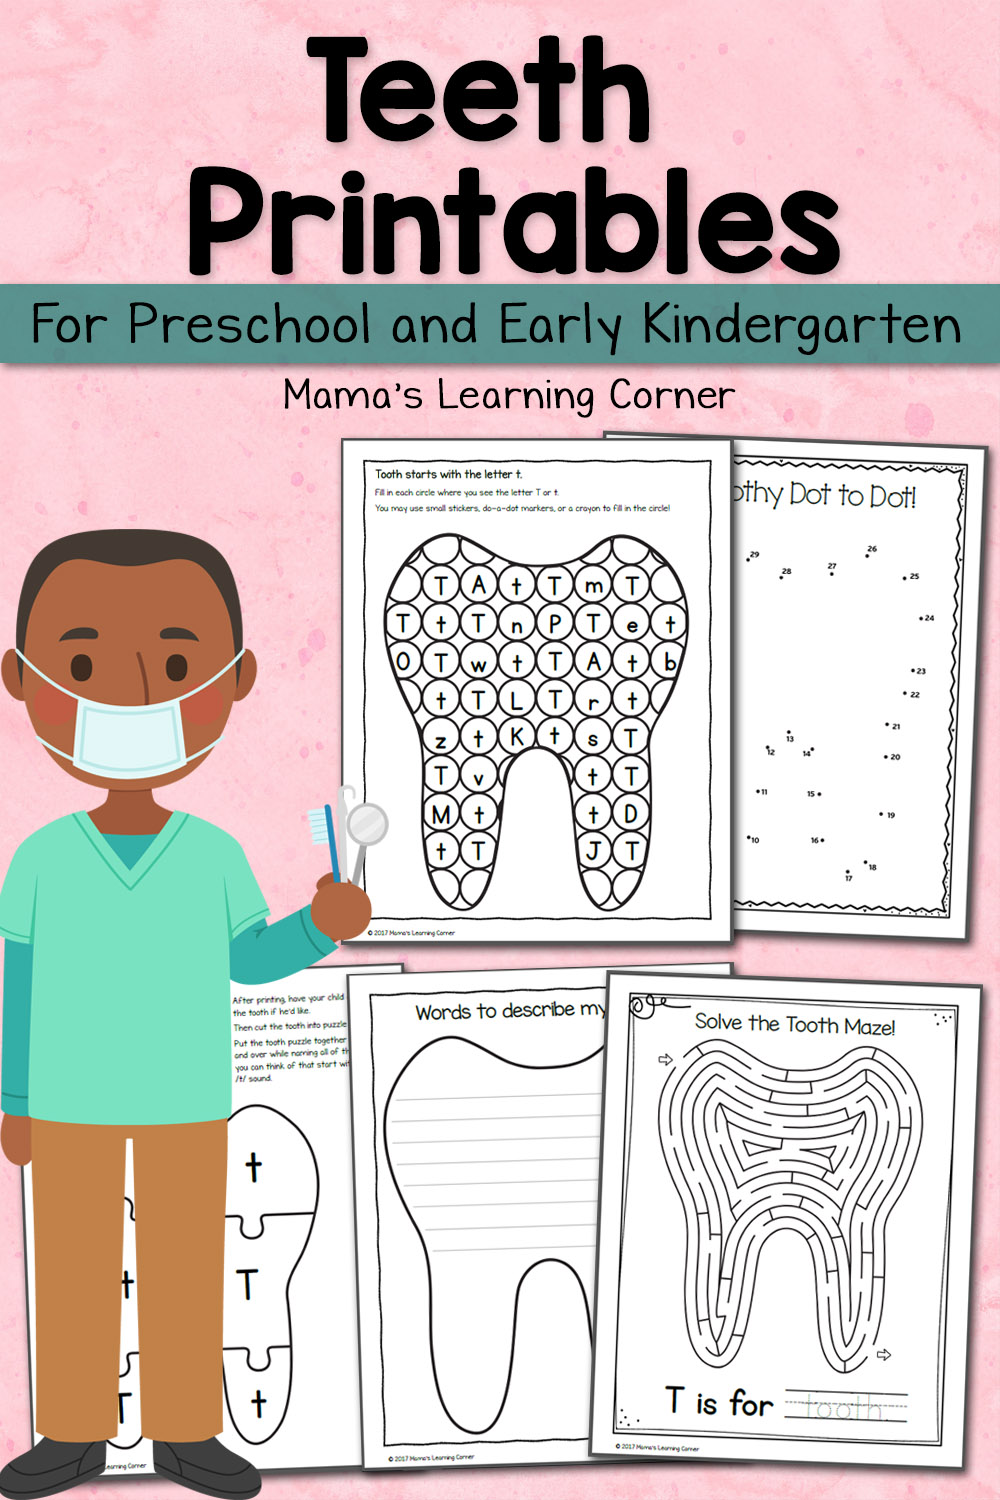 teeth-printables-for-preschool-and-kindergarten-mamas-learning-corner